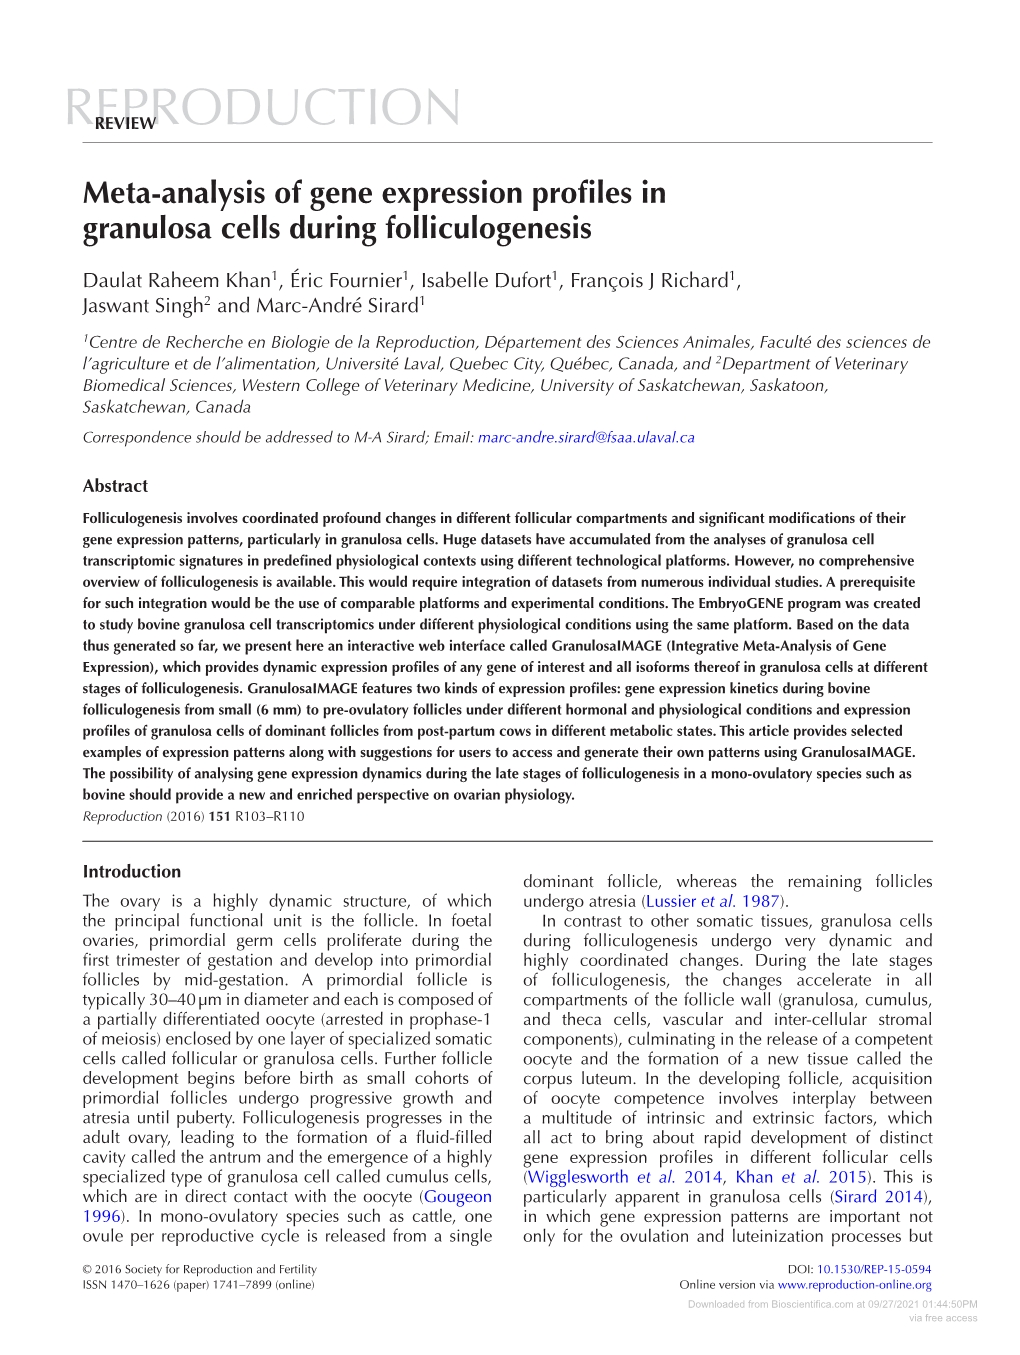 Meta-Analysis of Gene Expression Profiles in Granulosa Cells During Folliculogenesis